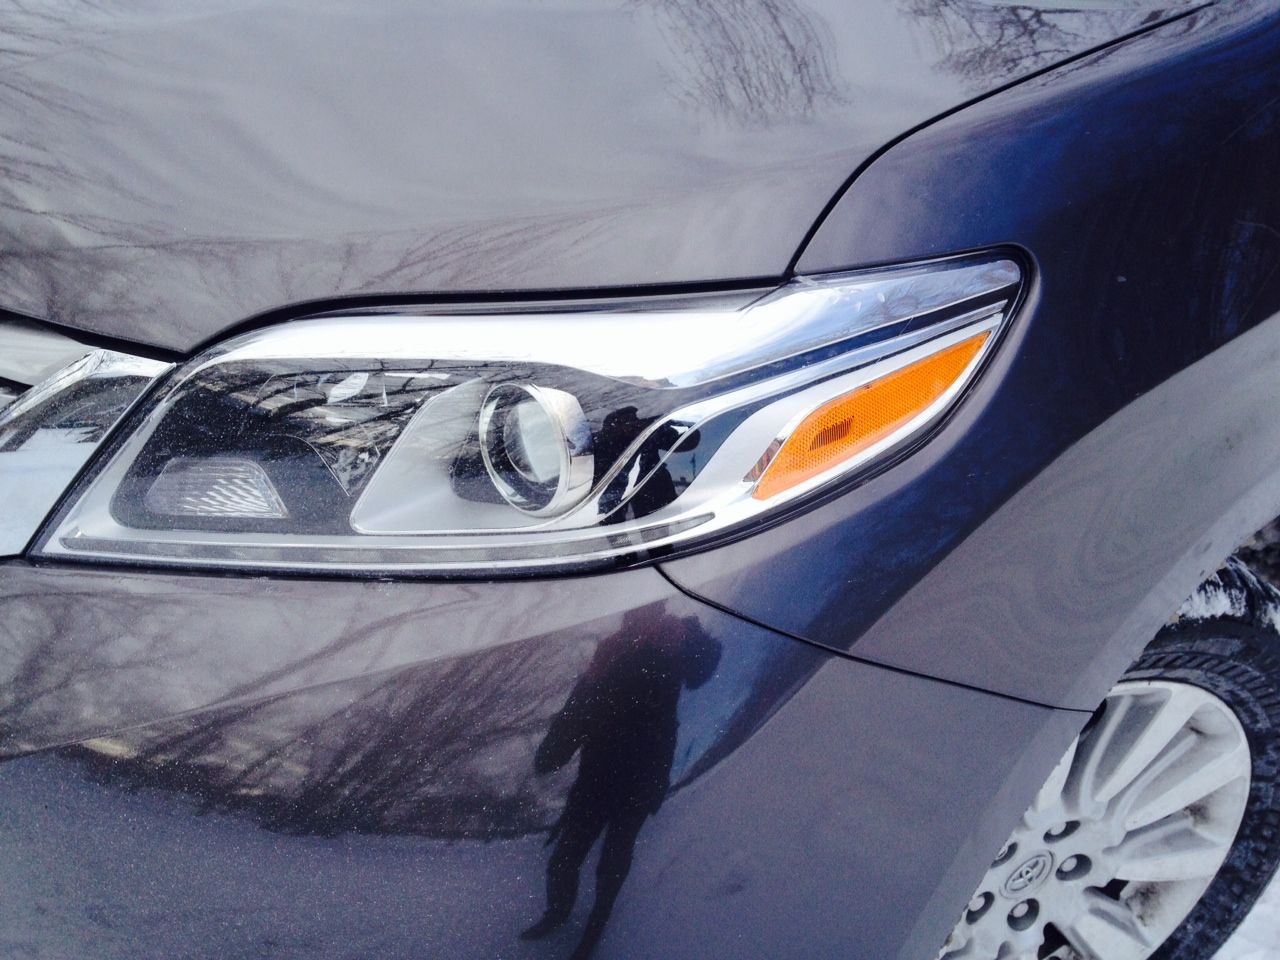 2015 Toyota Sienna Premium AWD: Driven